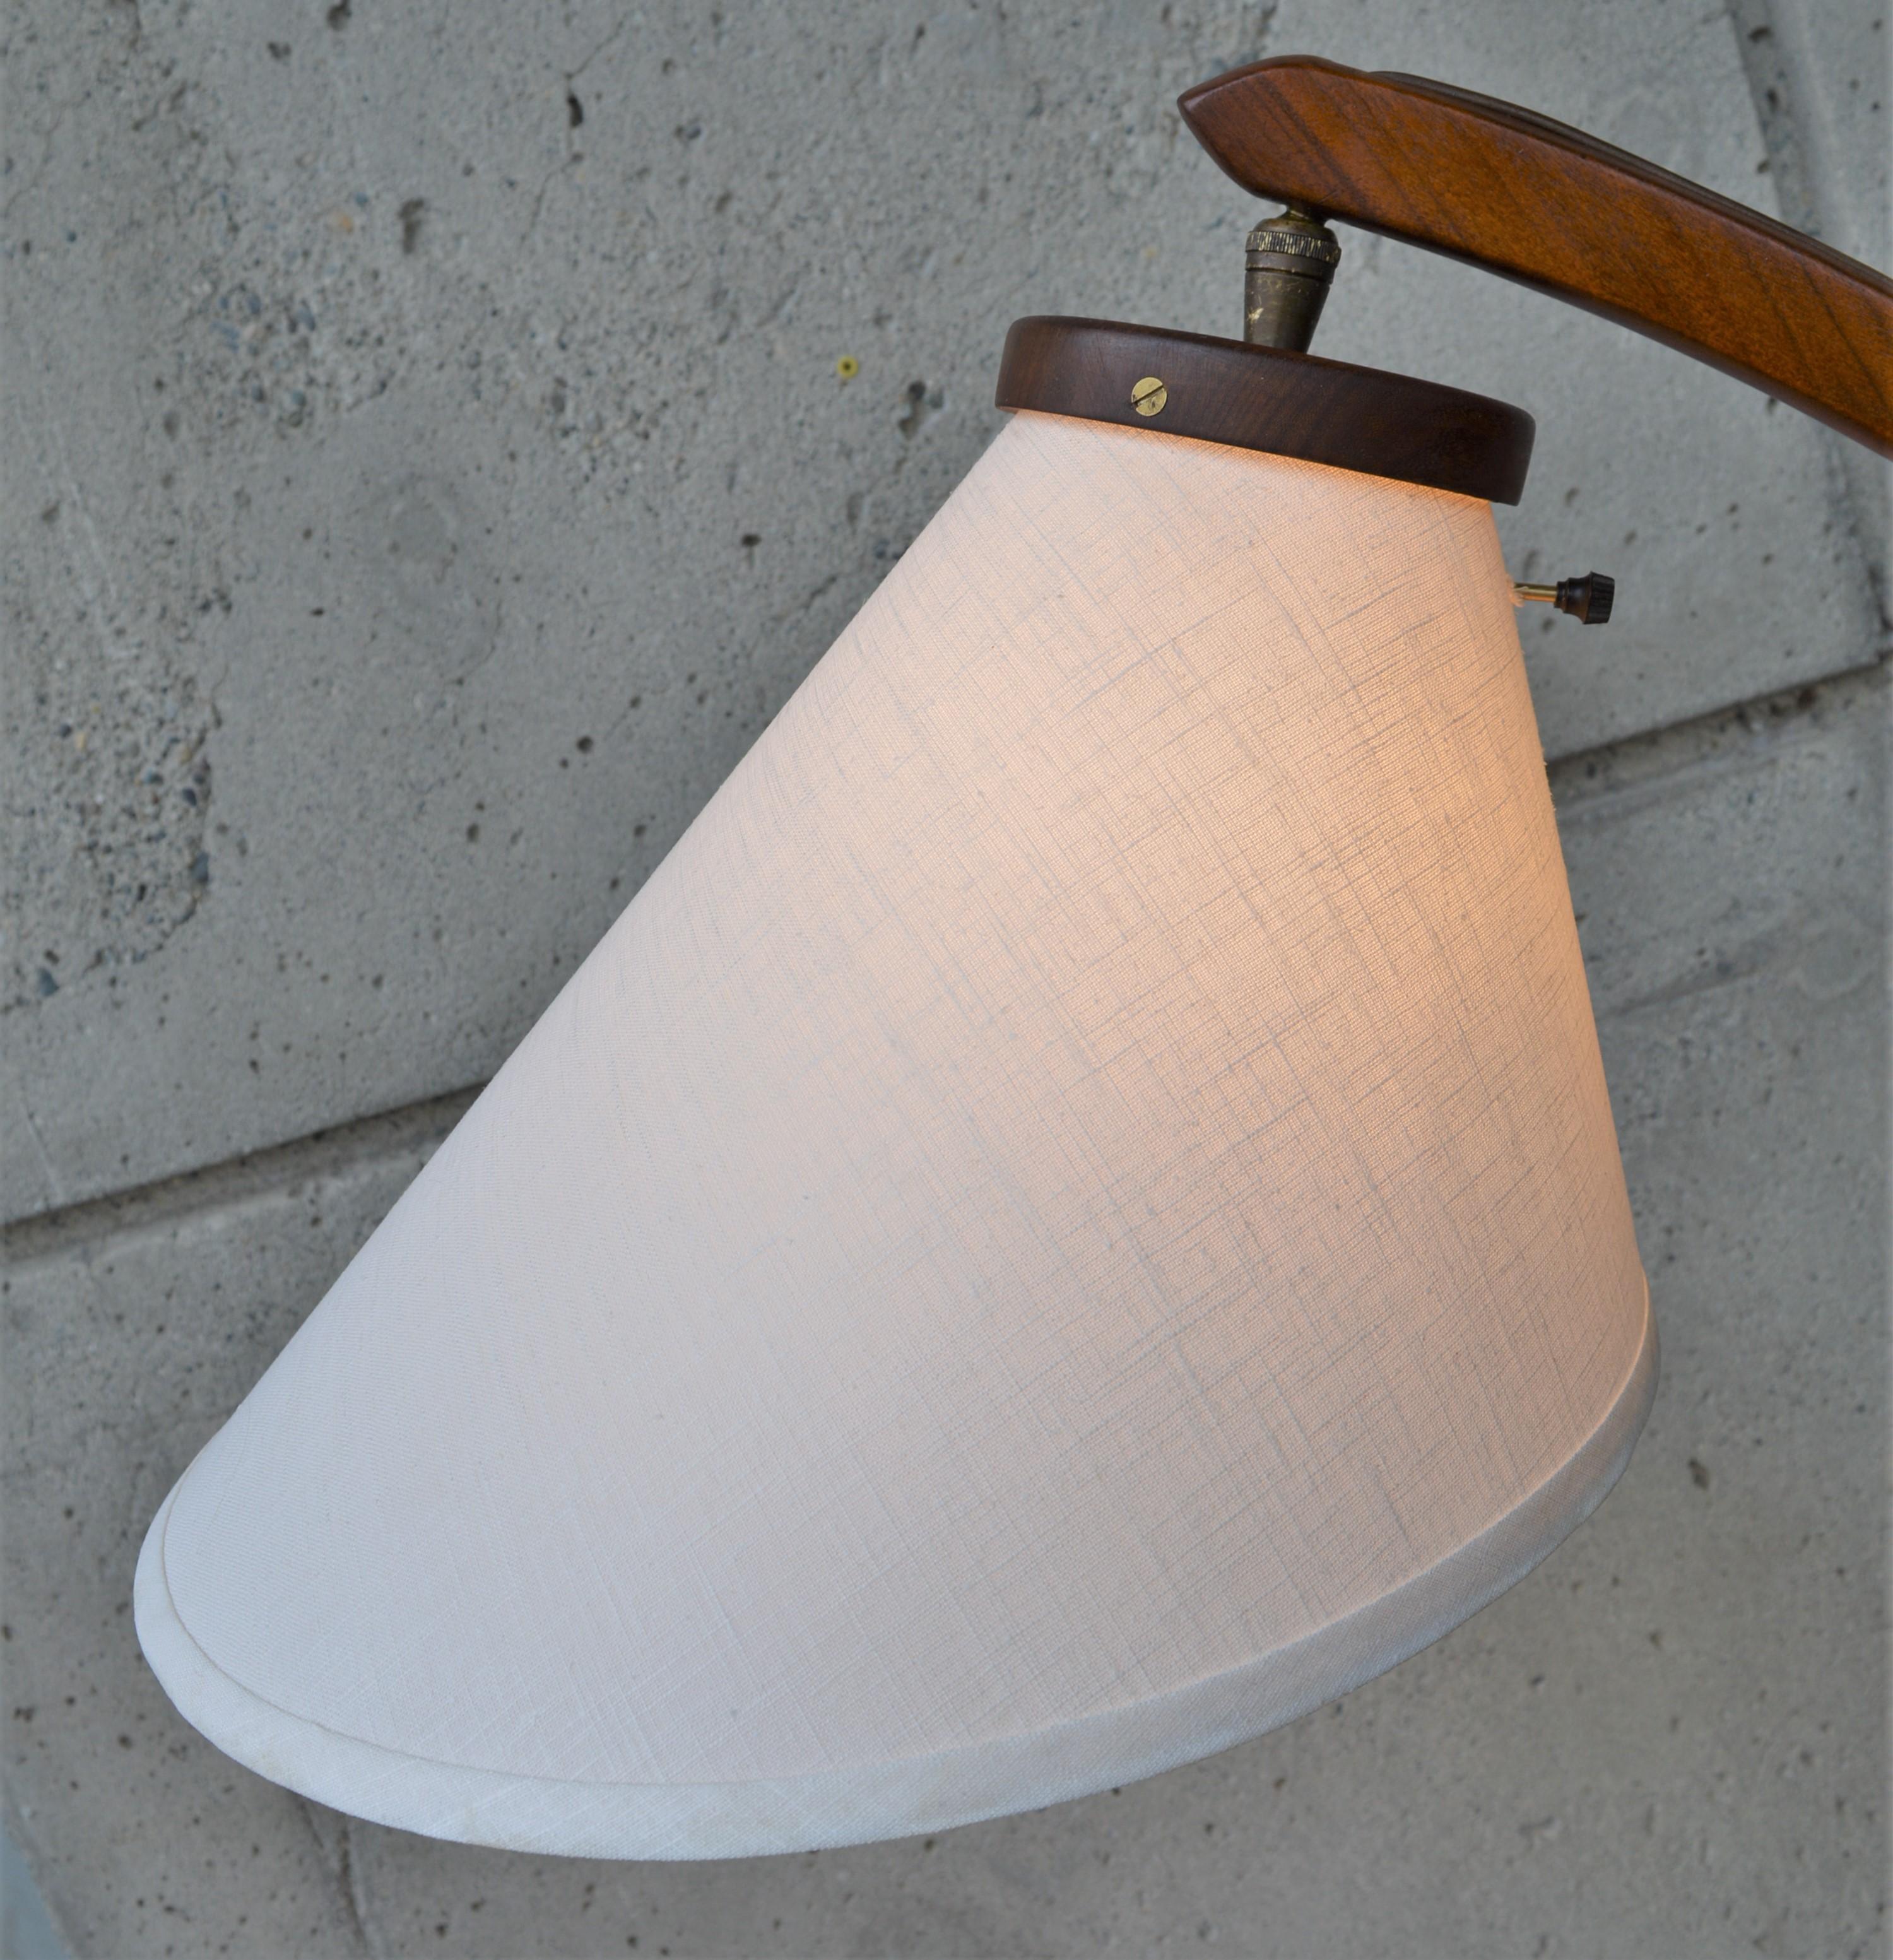 Mid-20th Century Danish Teak Arc or Bow Tripod Floor Lamp with New Bonnet Shade, Rispal Style